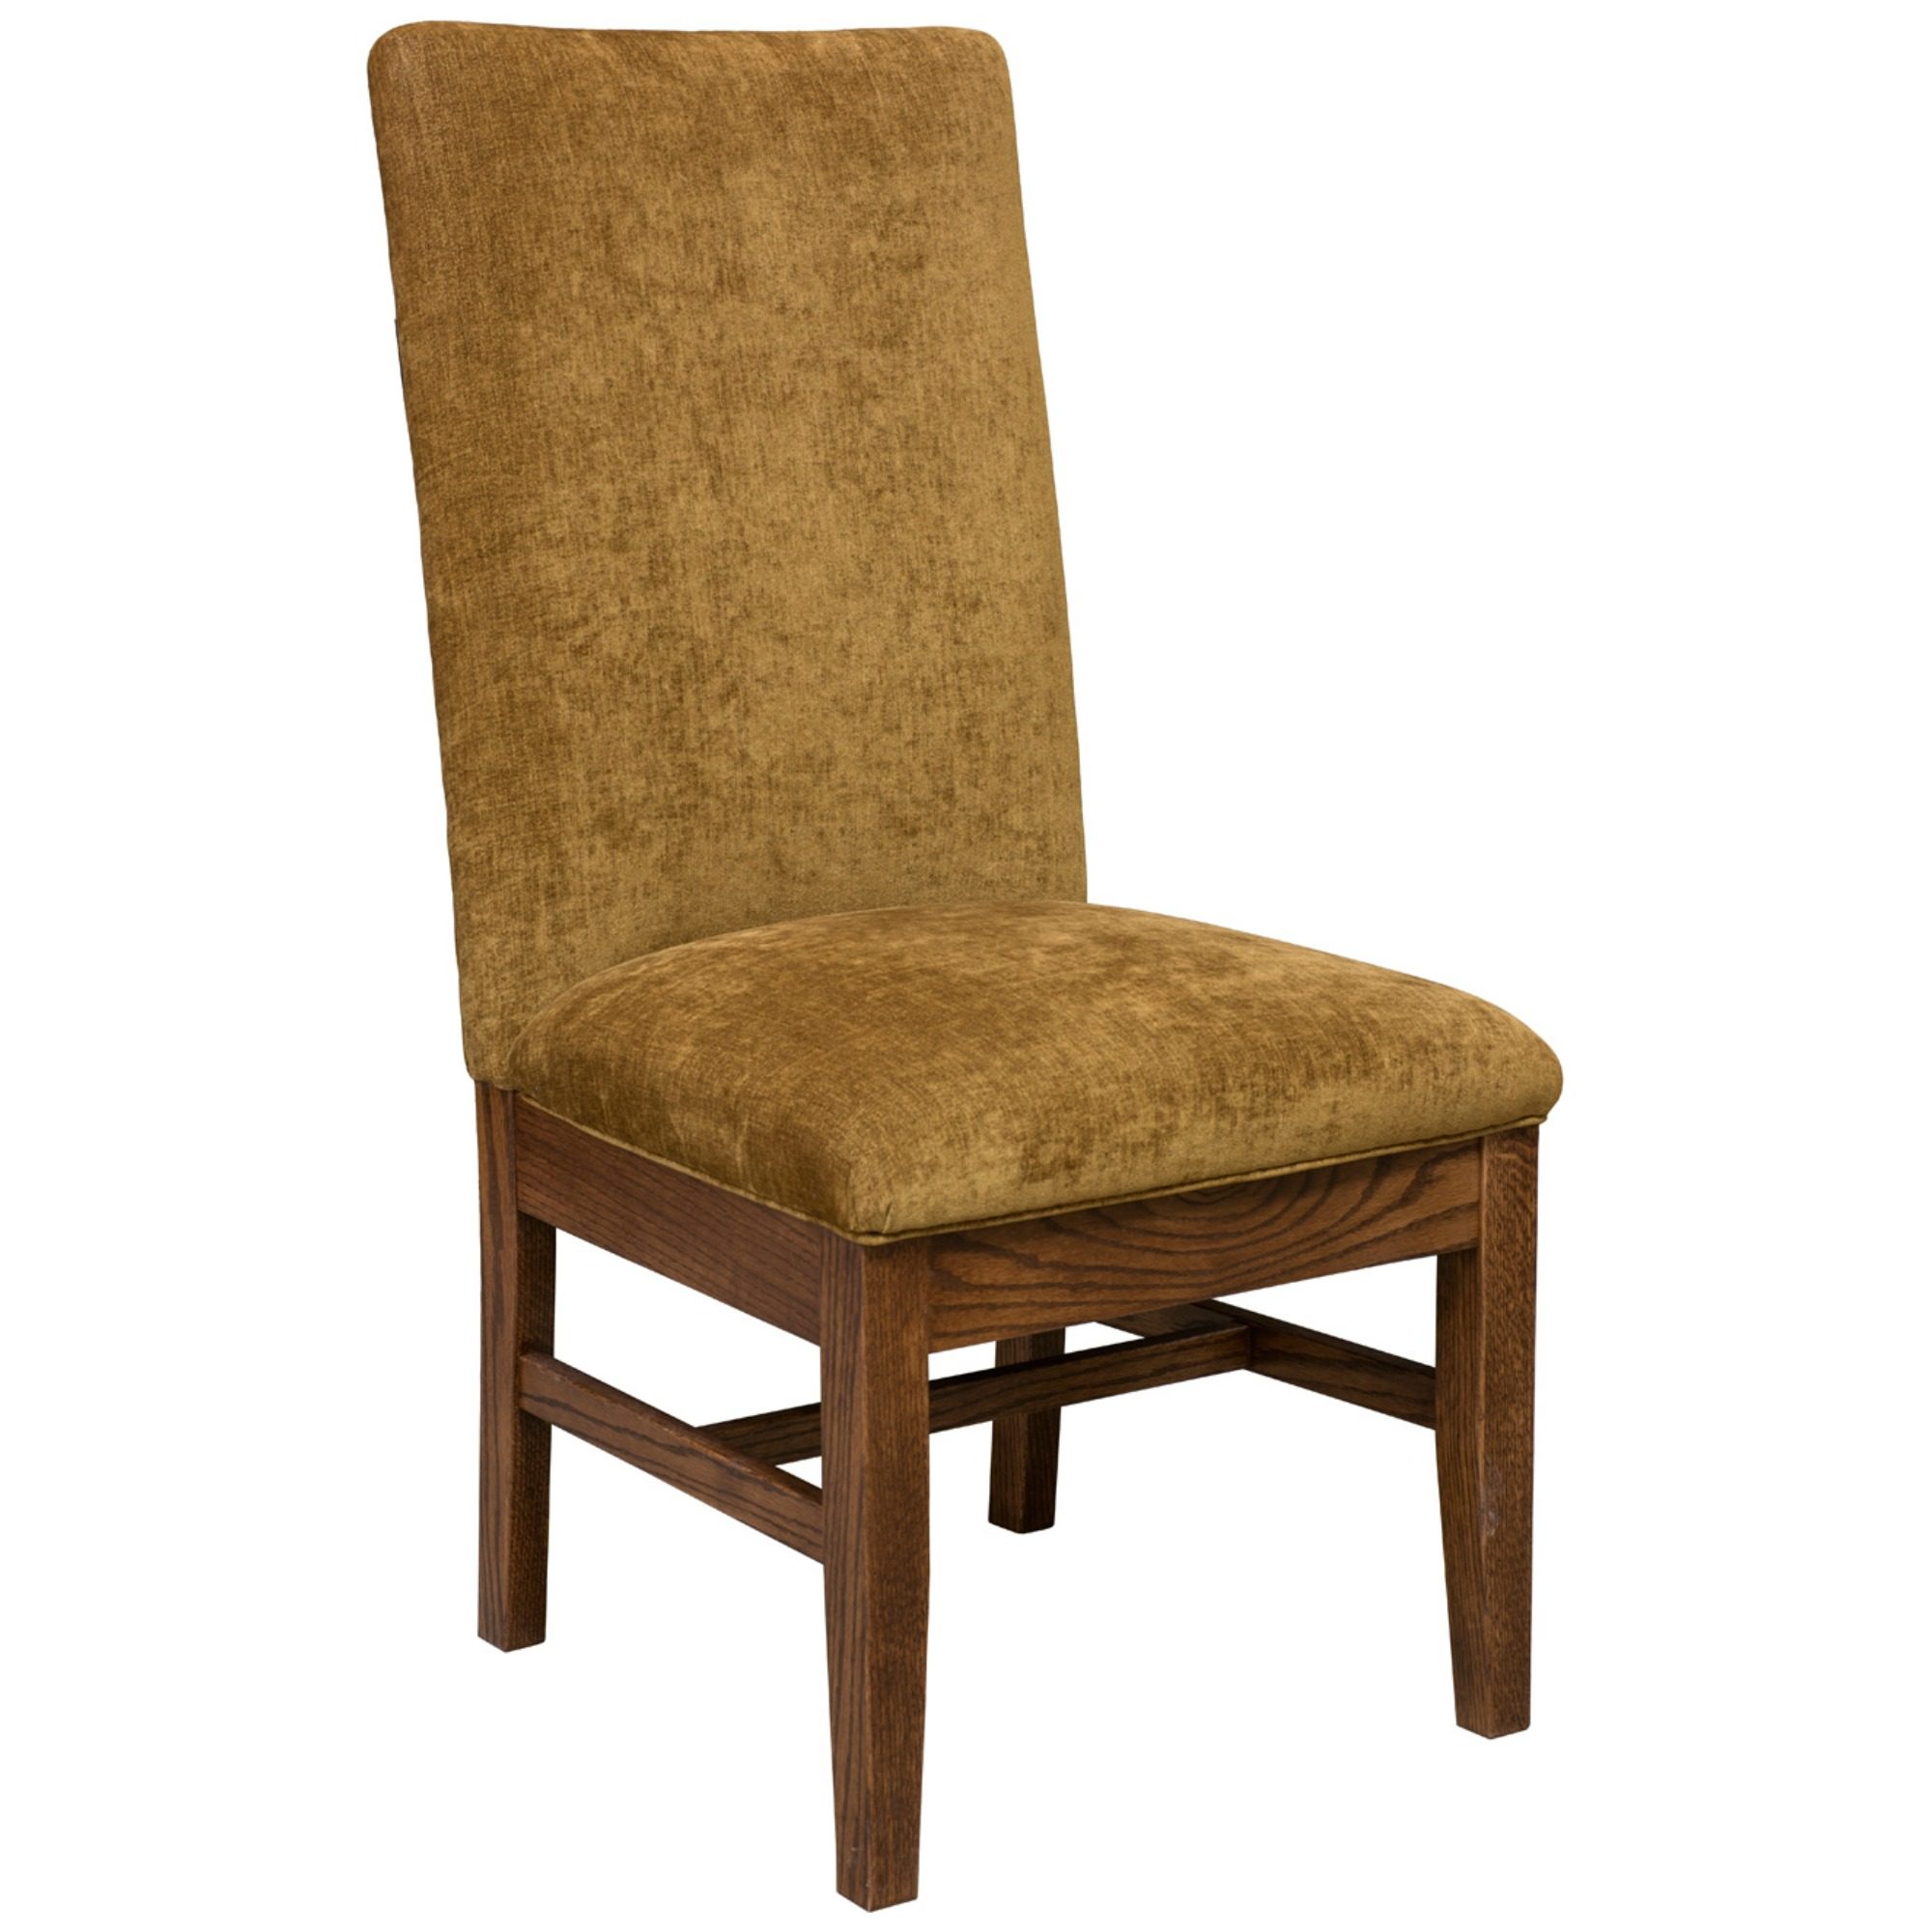 sutter-mills-side-chair-cushion-trailway